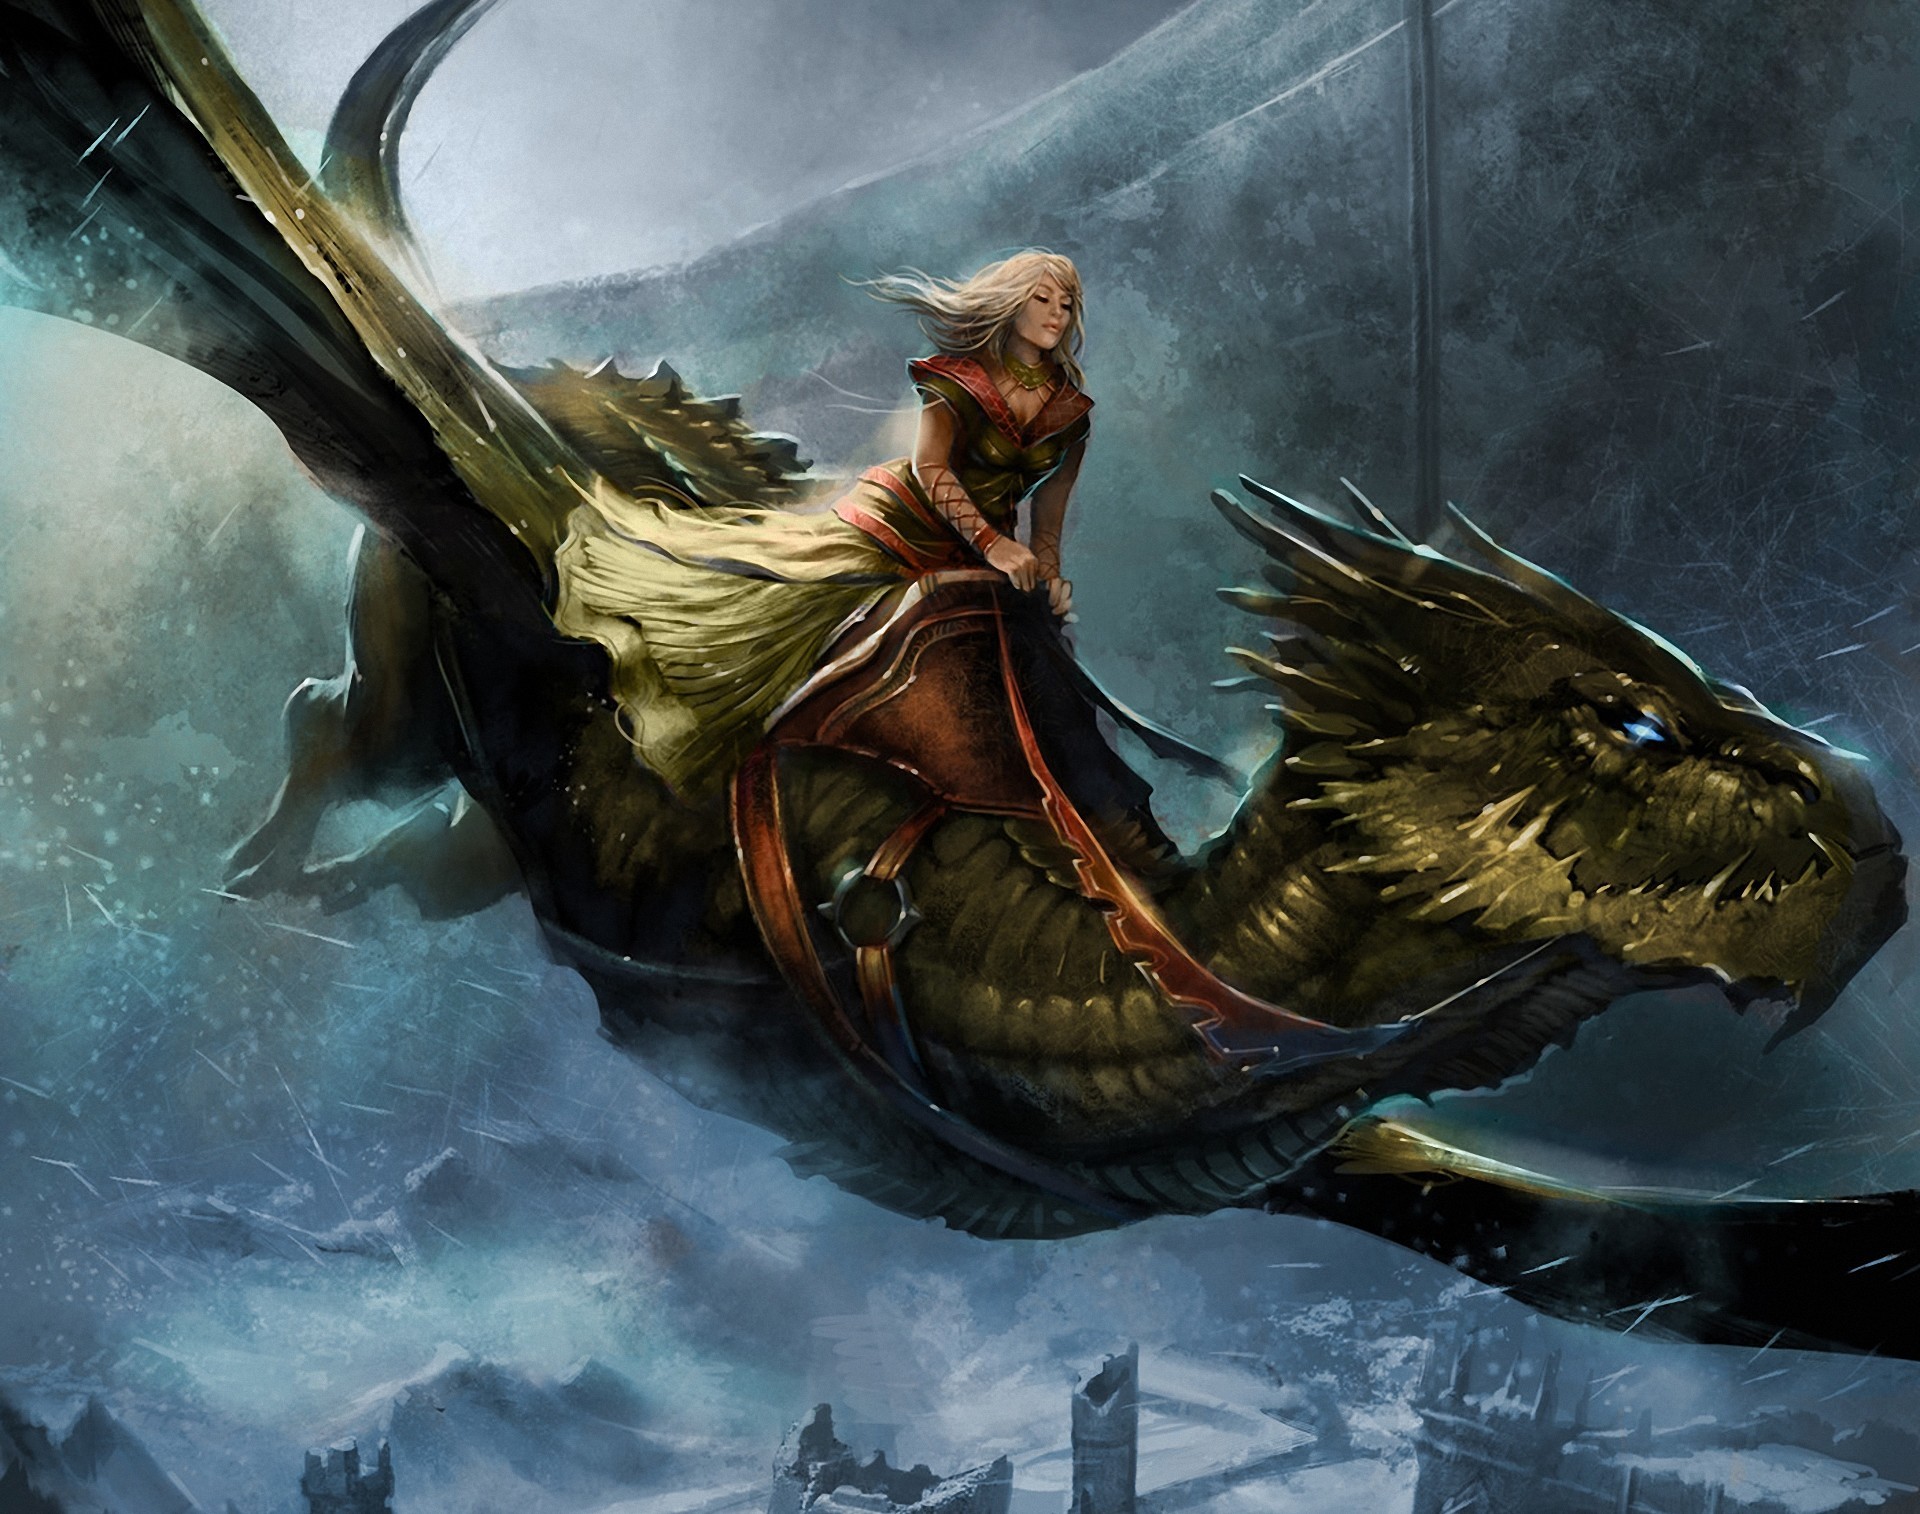 Daenerys Targaryen And Dragons In Fire Wallpapers